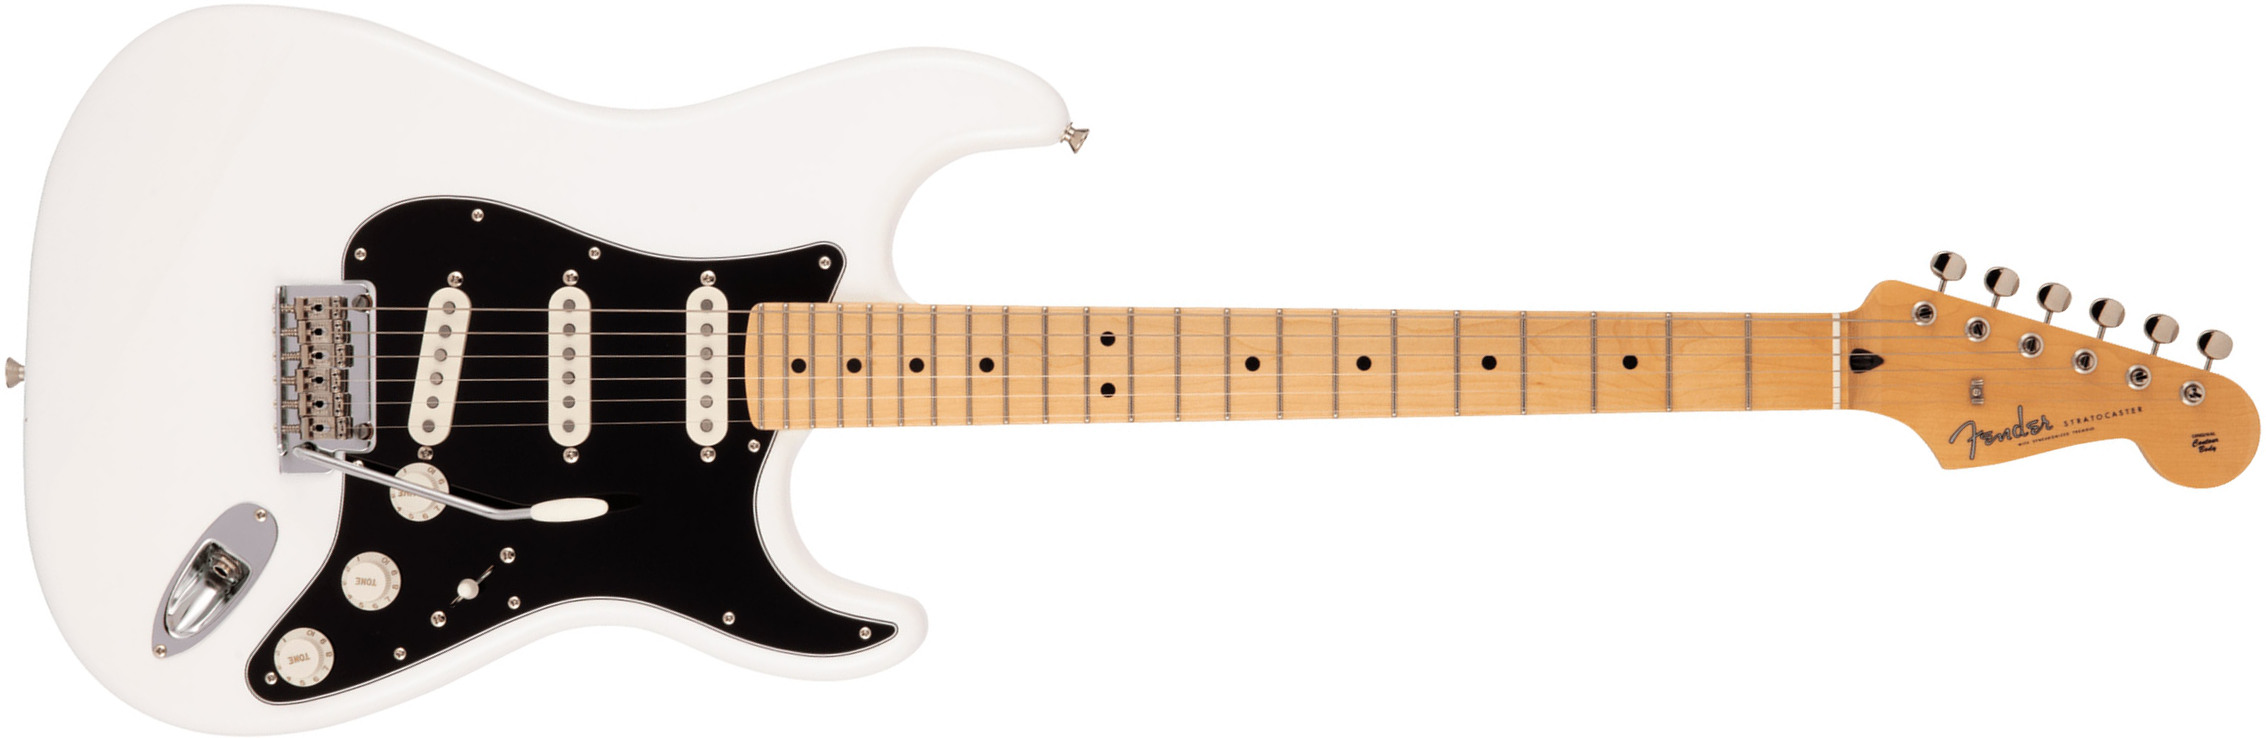 Fender Strat Hybrid Ii Mij Jap 3s Trem Mn - Arctic White - Str shape electric guitar - Main picture